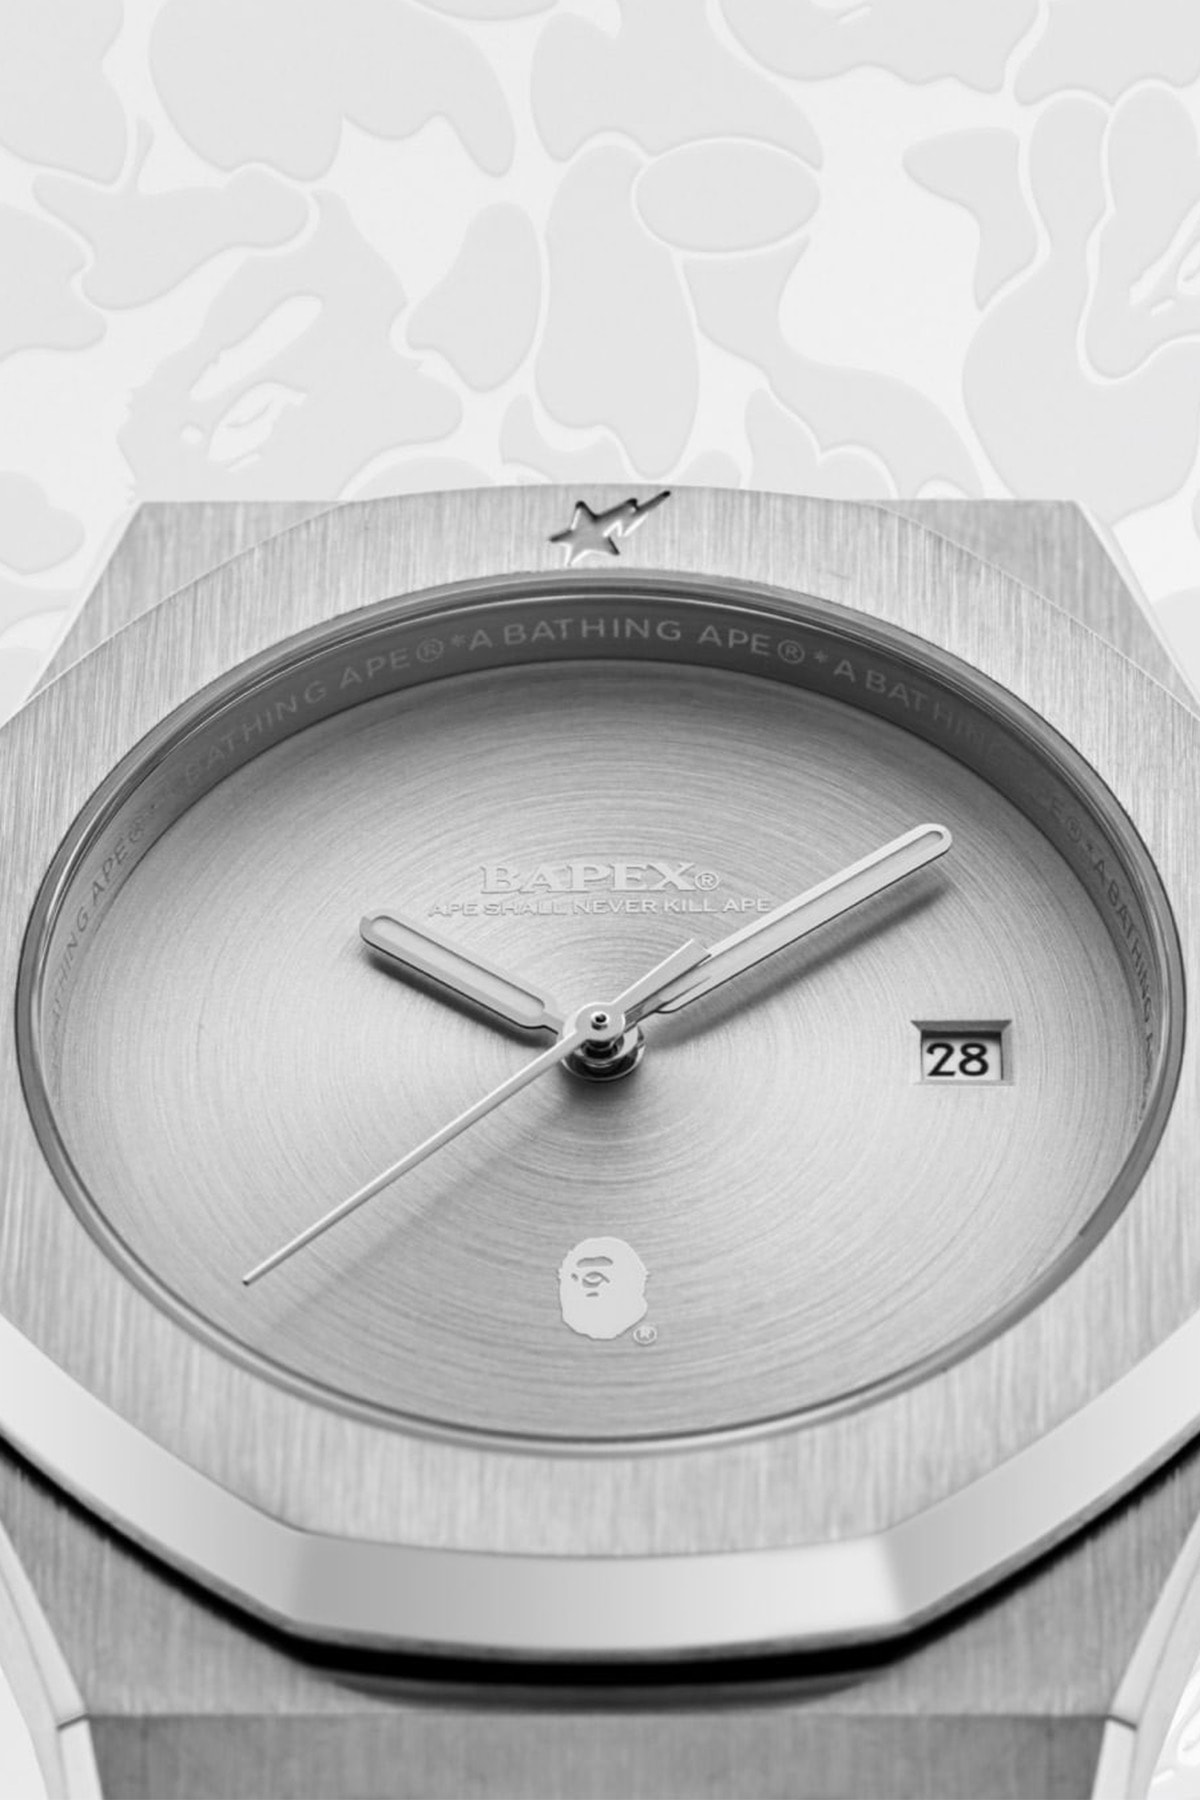 A BATHING APE®︎ 正式推出全新錶款型號 TYPE 9 BAPEX